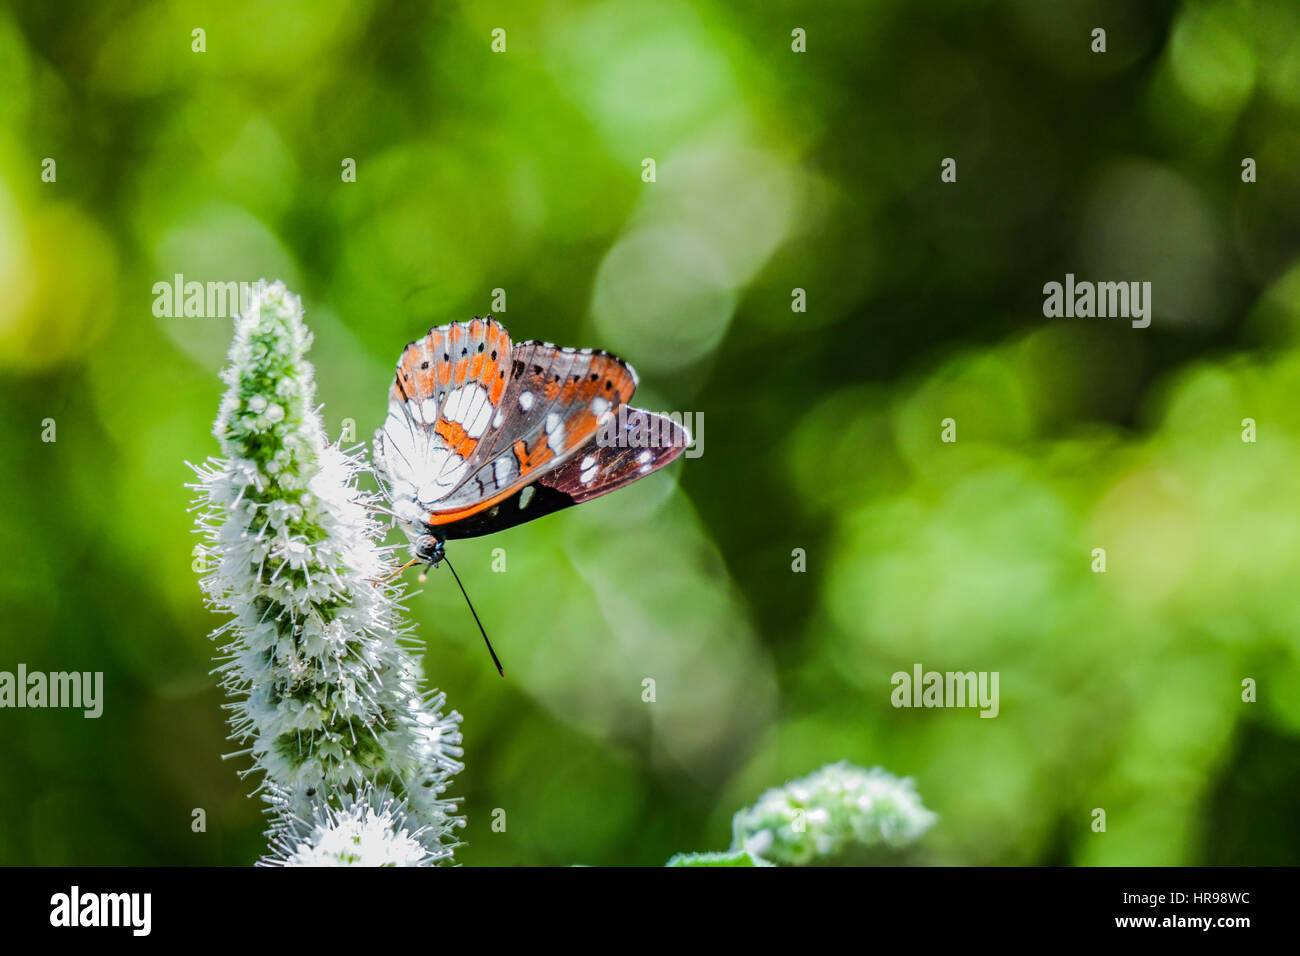 Orange butterfly enjoying the sun on green plant Stock Photo